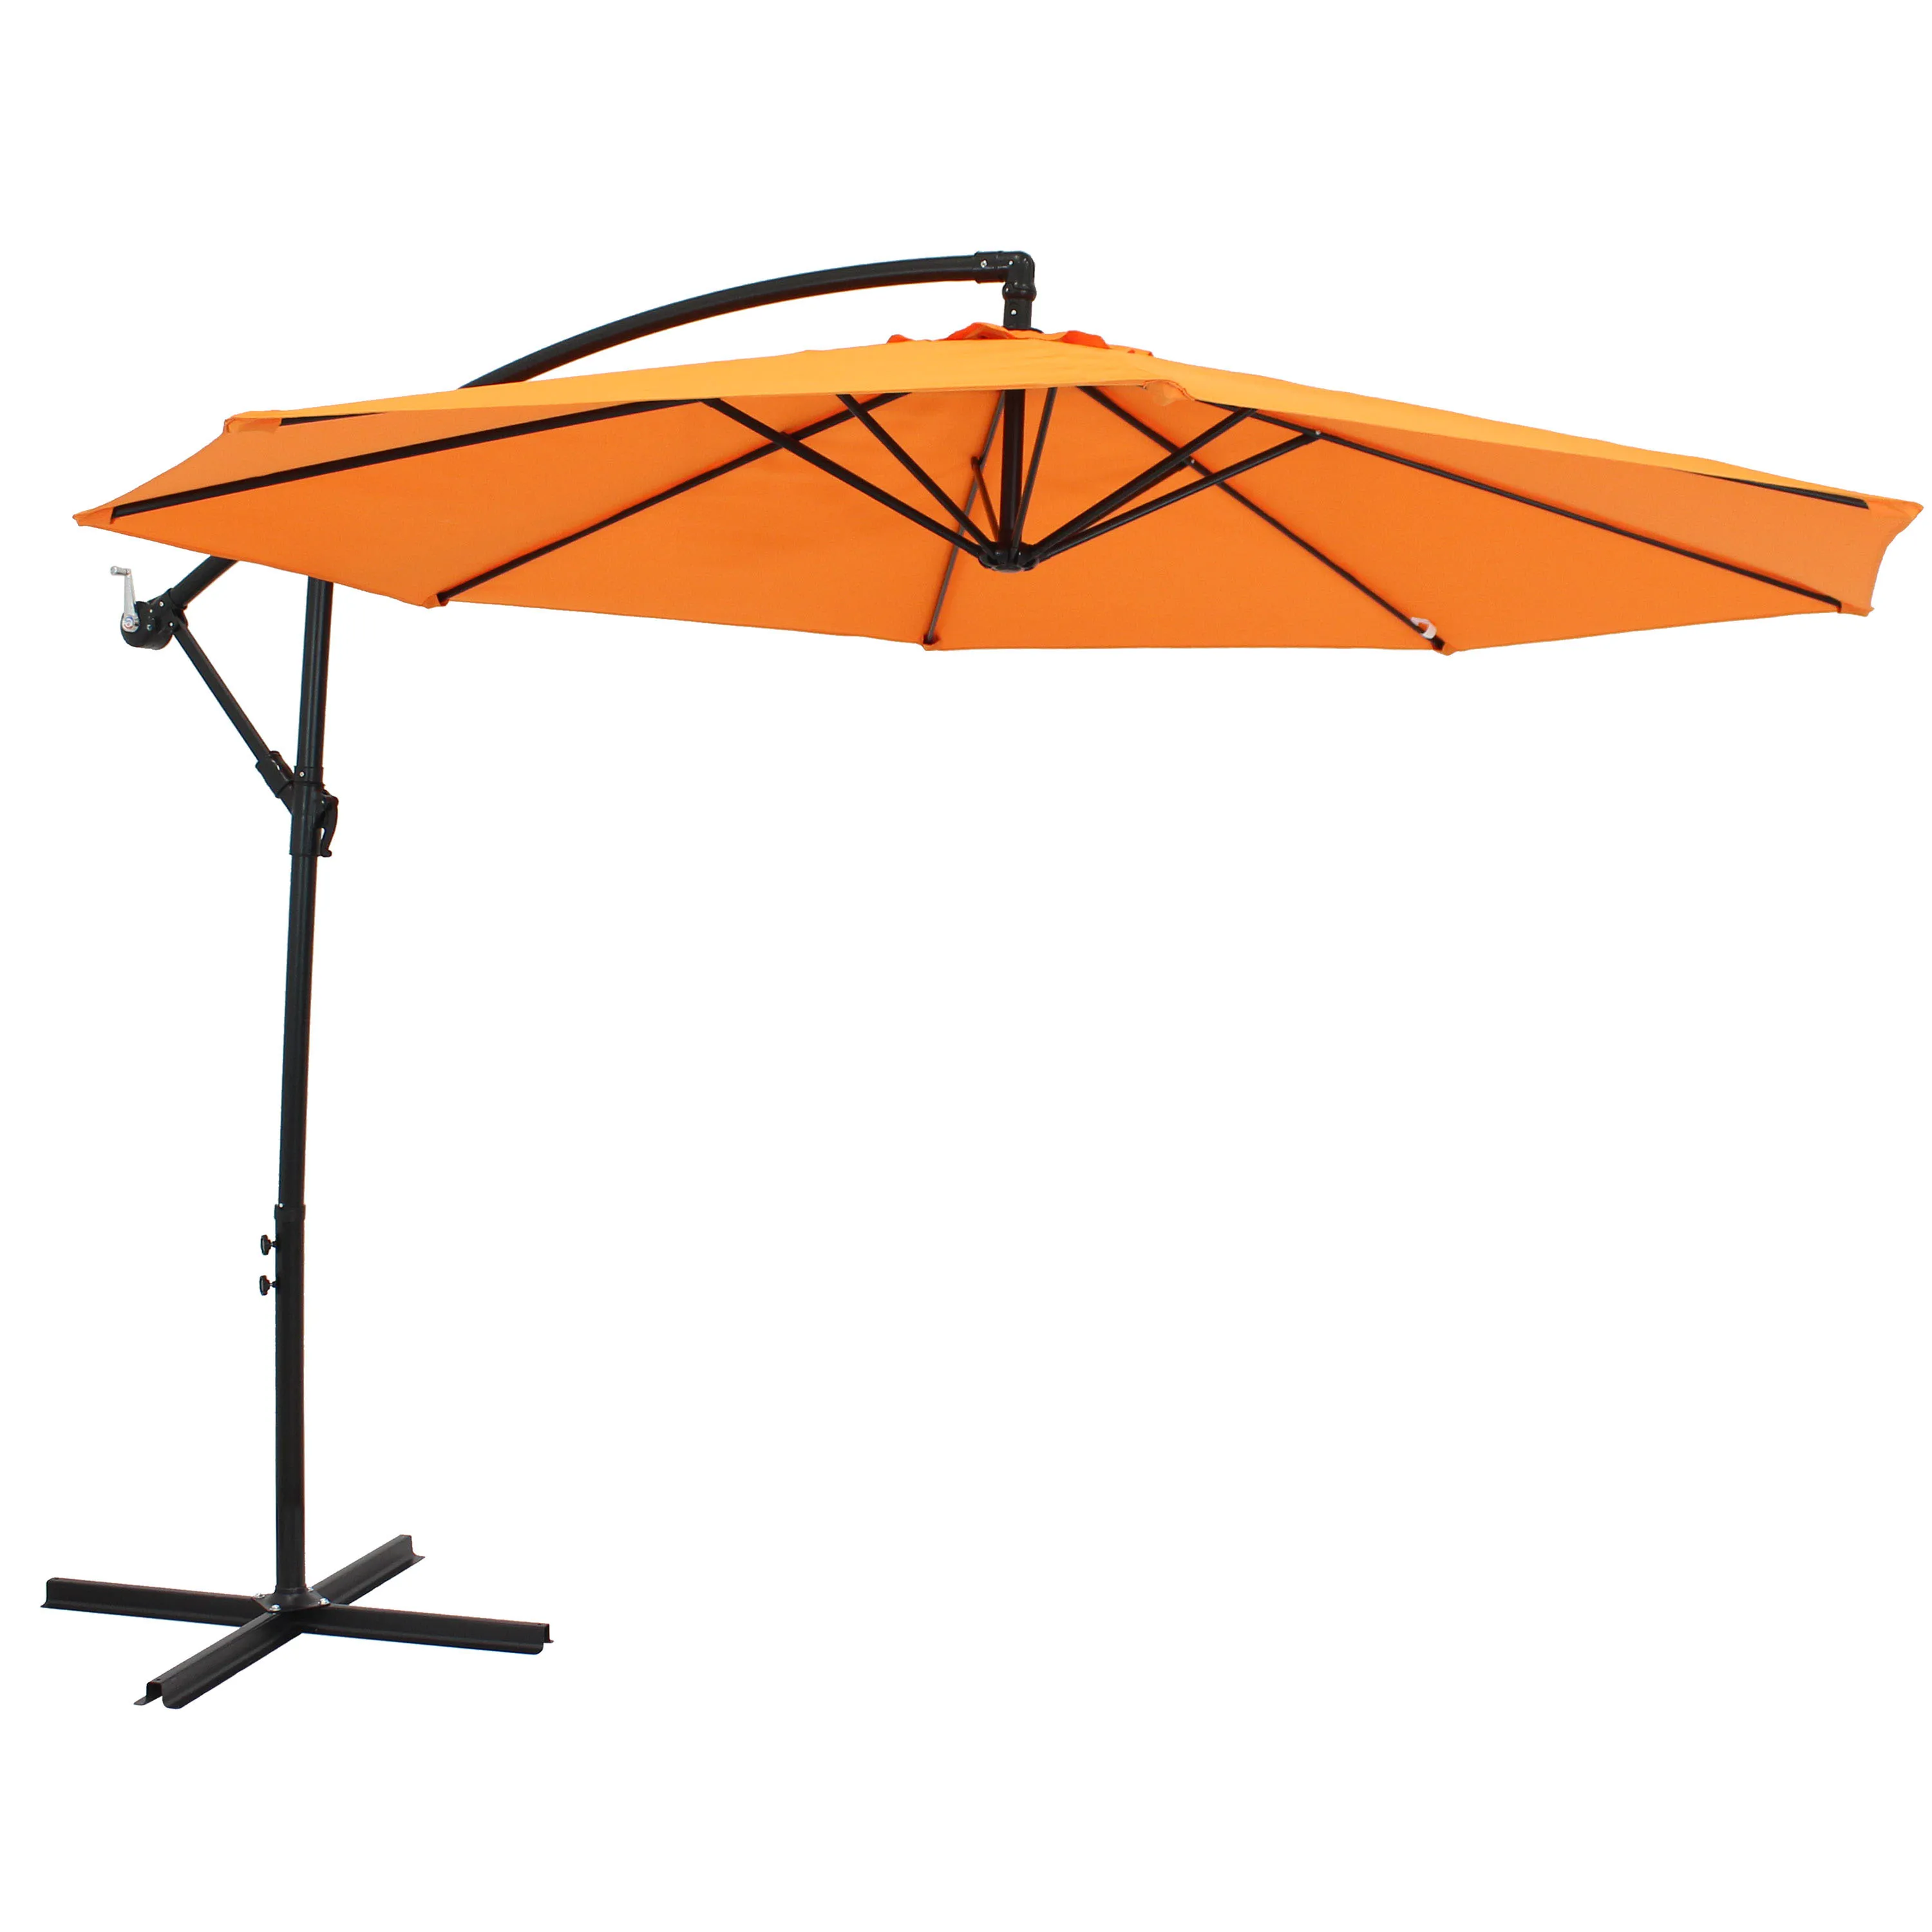 Sunnydaze 9.5 ft Cantilever Offset Patio Umbrella with Crank